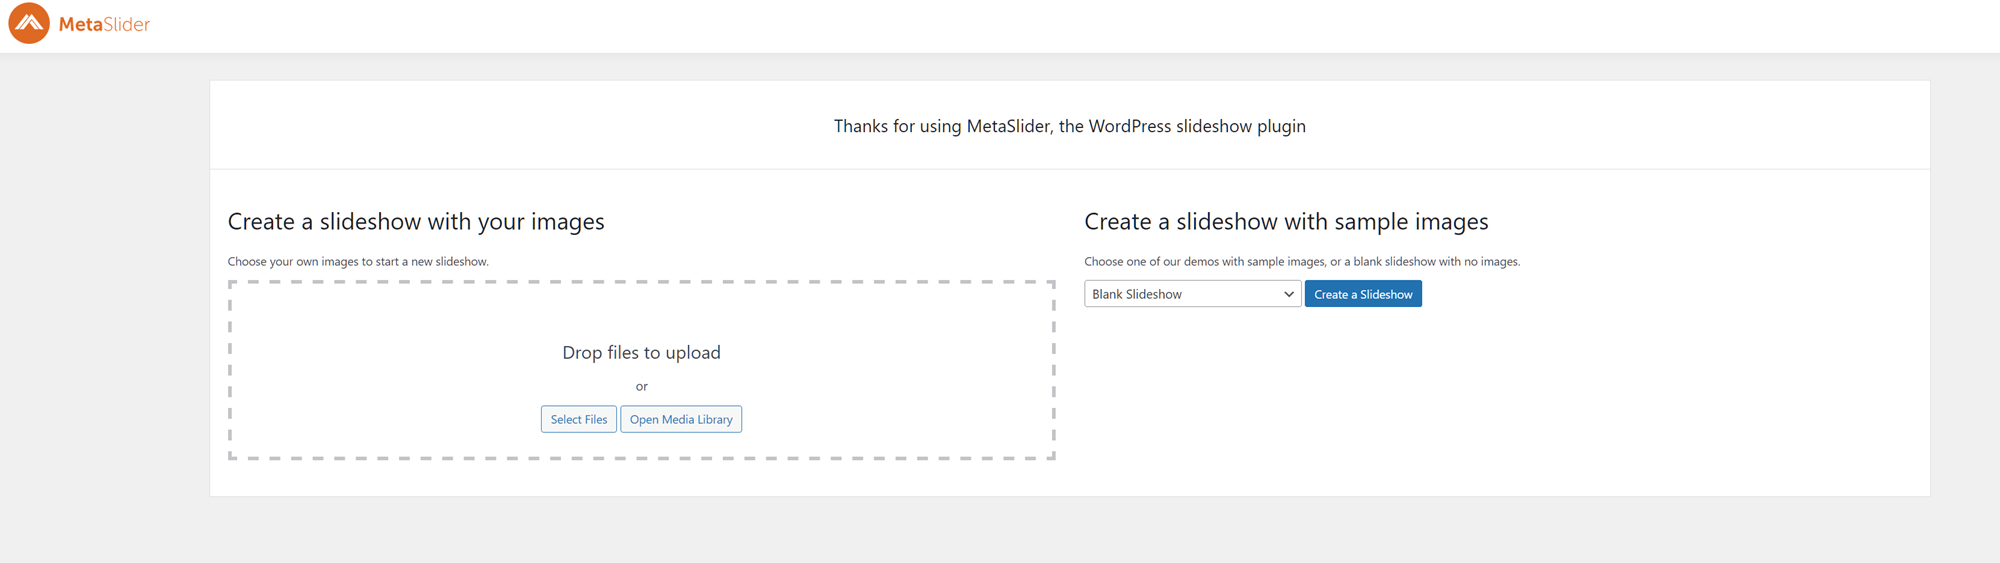 MetaSlider review screenshot of the Quickstart slideshow setup